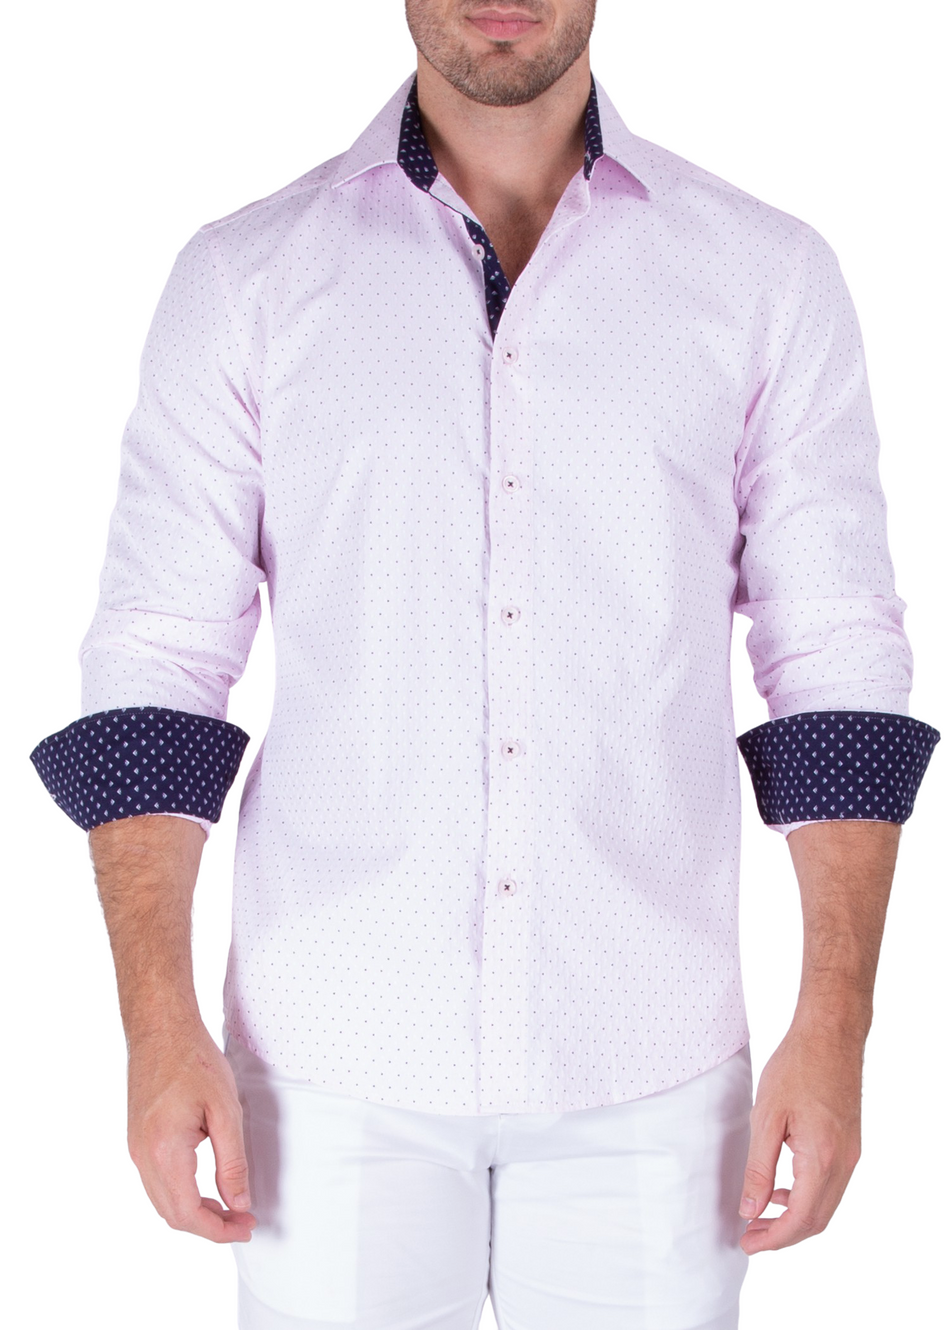 Polka Dot Stitched Texture Button Up Long Sleeve Dress Shirt Pink